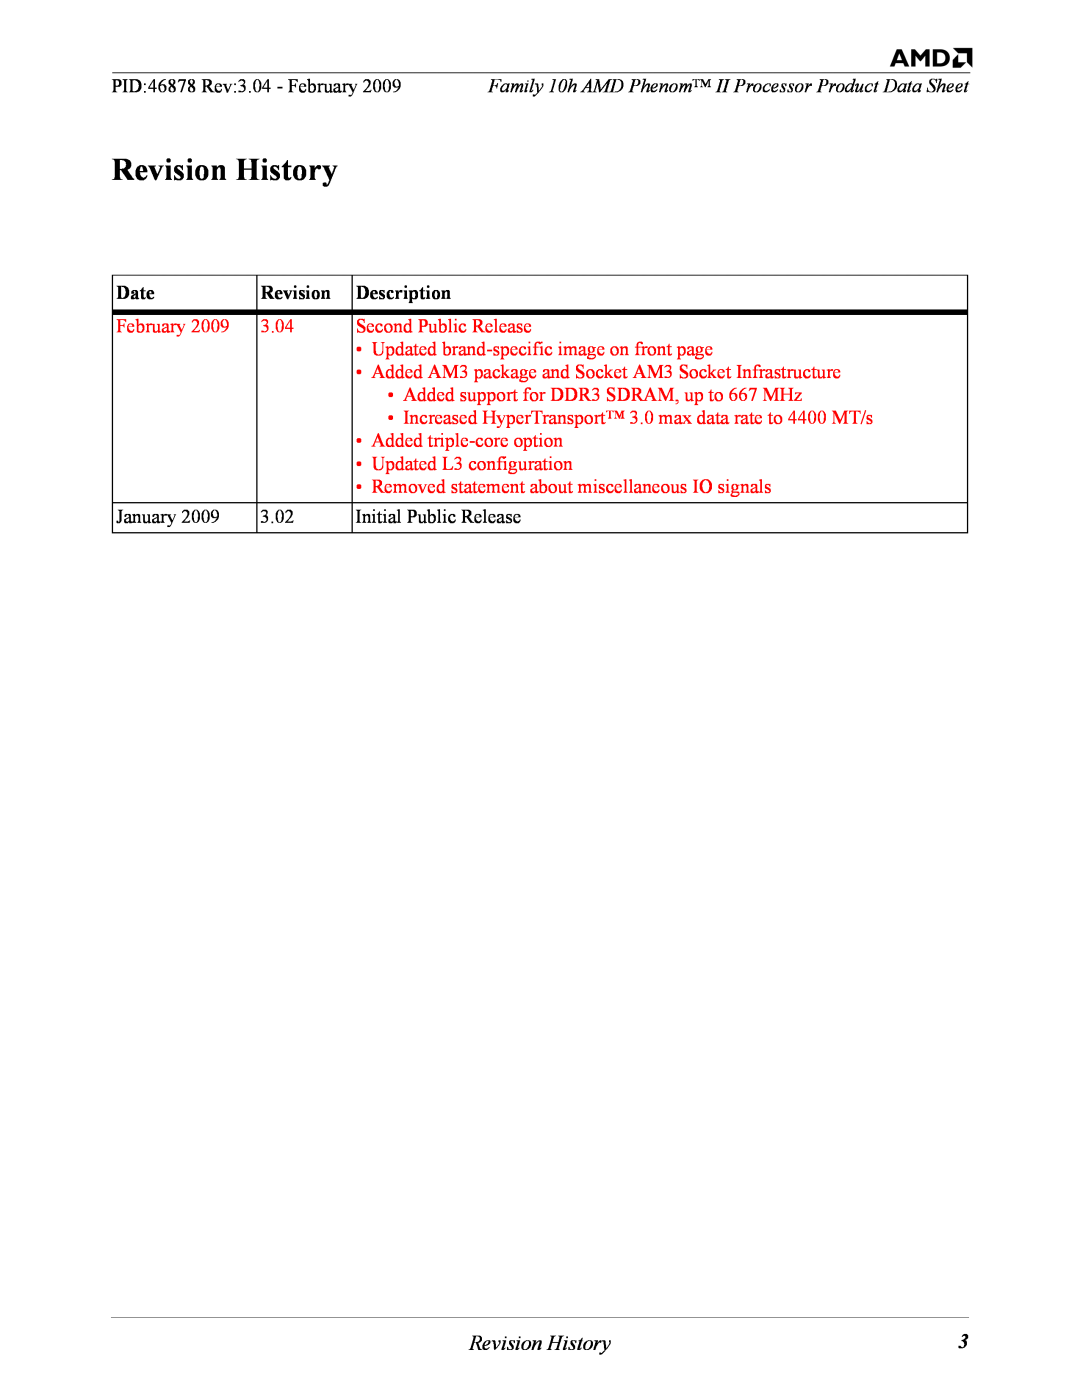 AMD II manual Revision History, Date, Description 